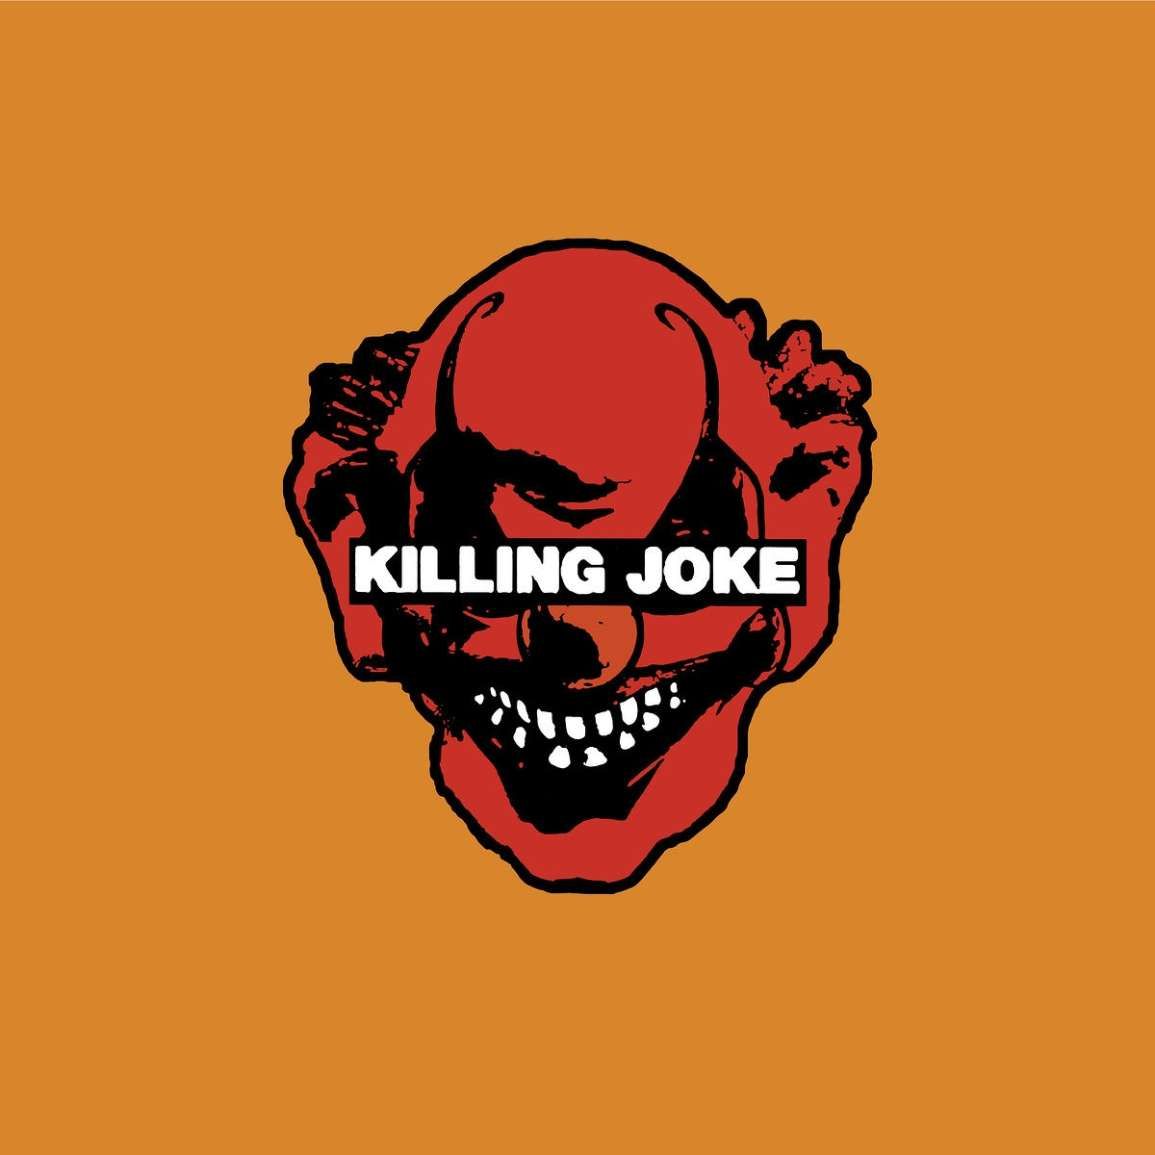 Killing Joke - Killing Joke 2003